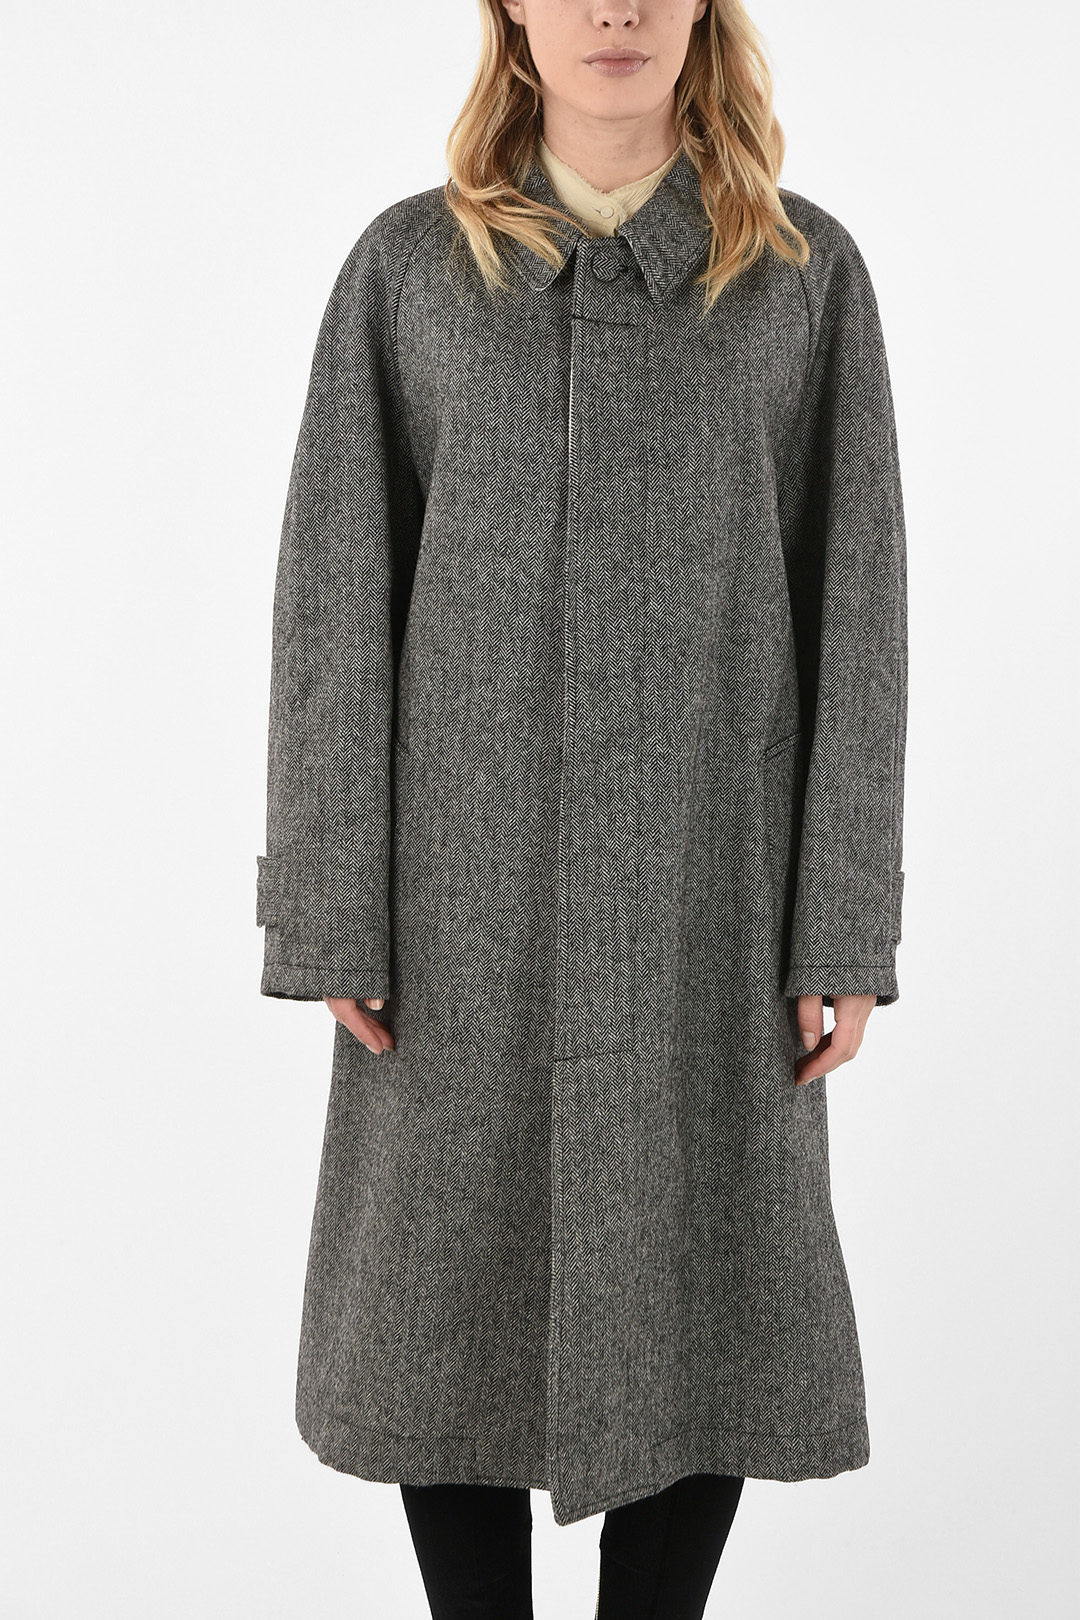 Jejia Wool Herringbone Coat women - Glamood Outlet